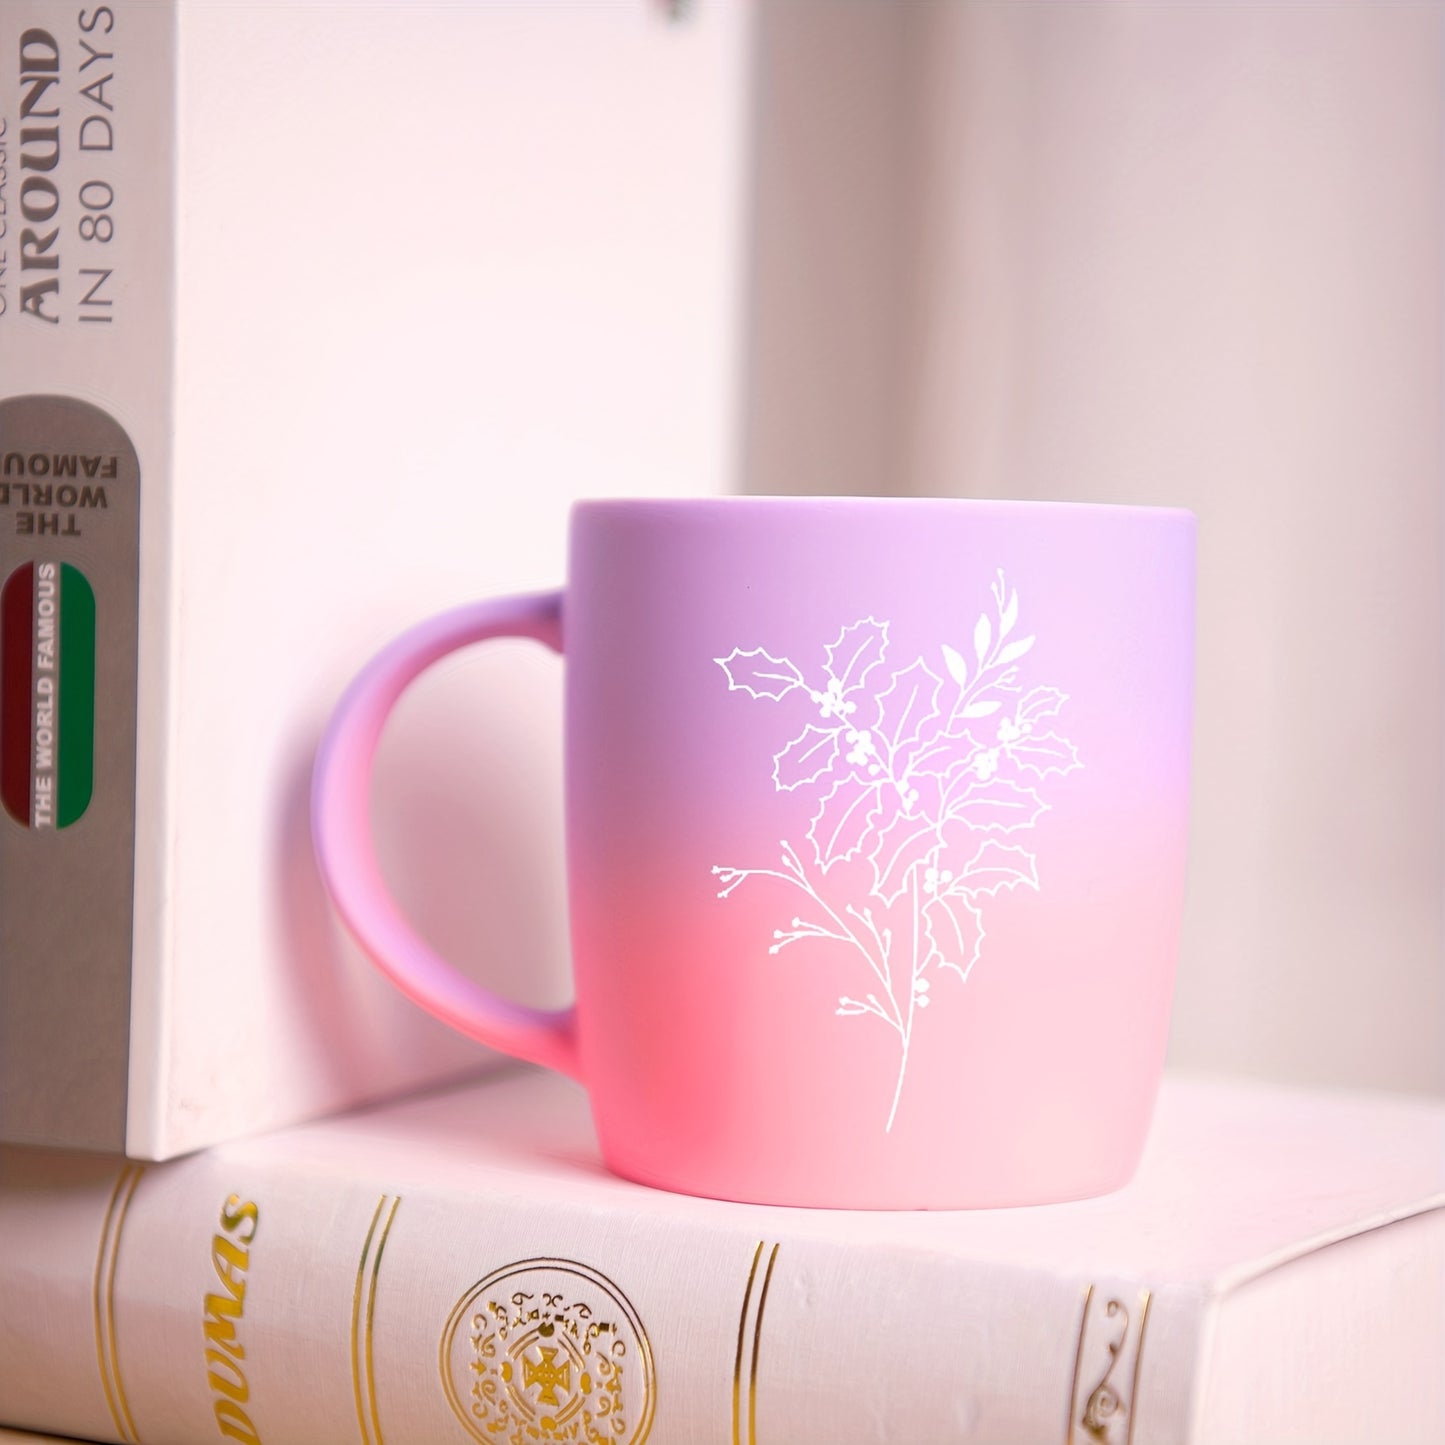 Hope & Love Flowered Two Tone Colored Mug claimedbygoddesigns